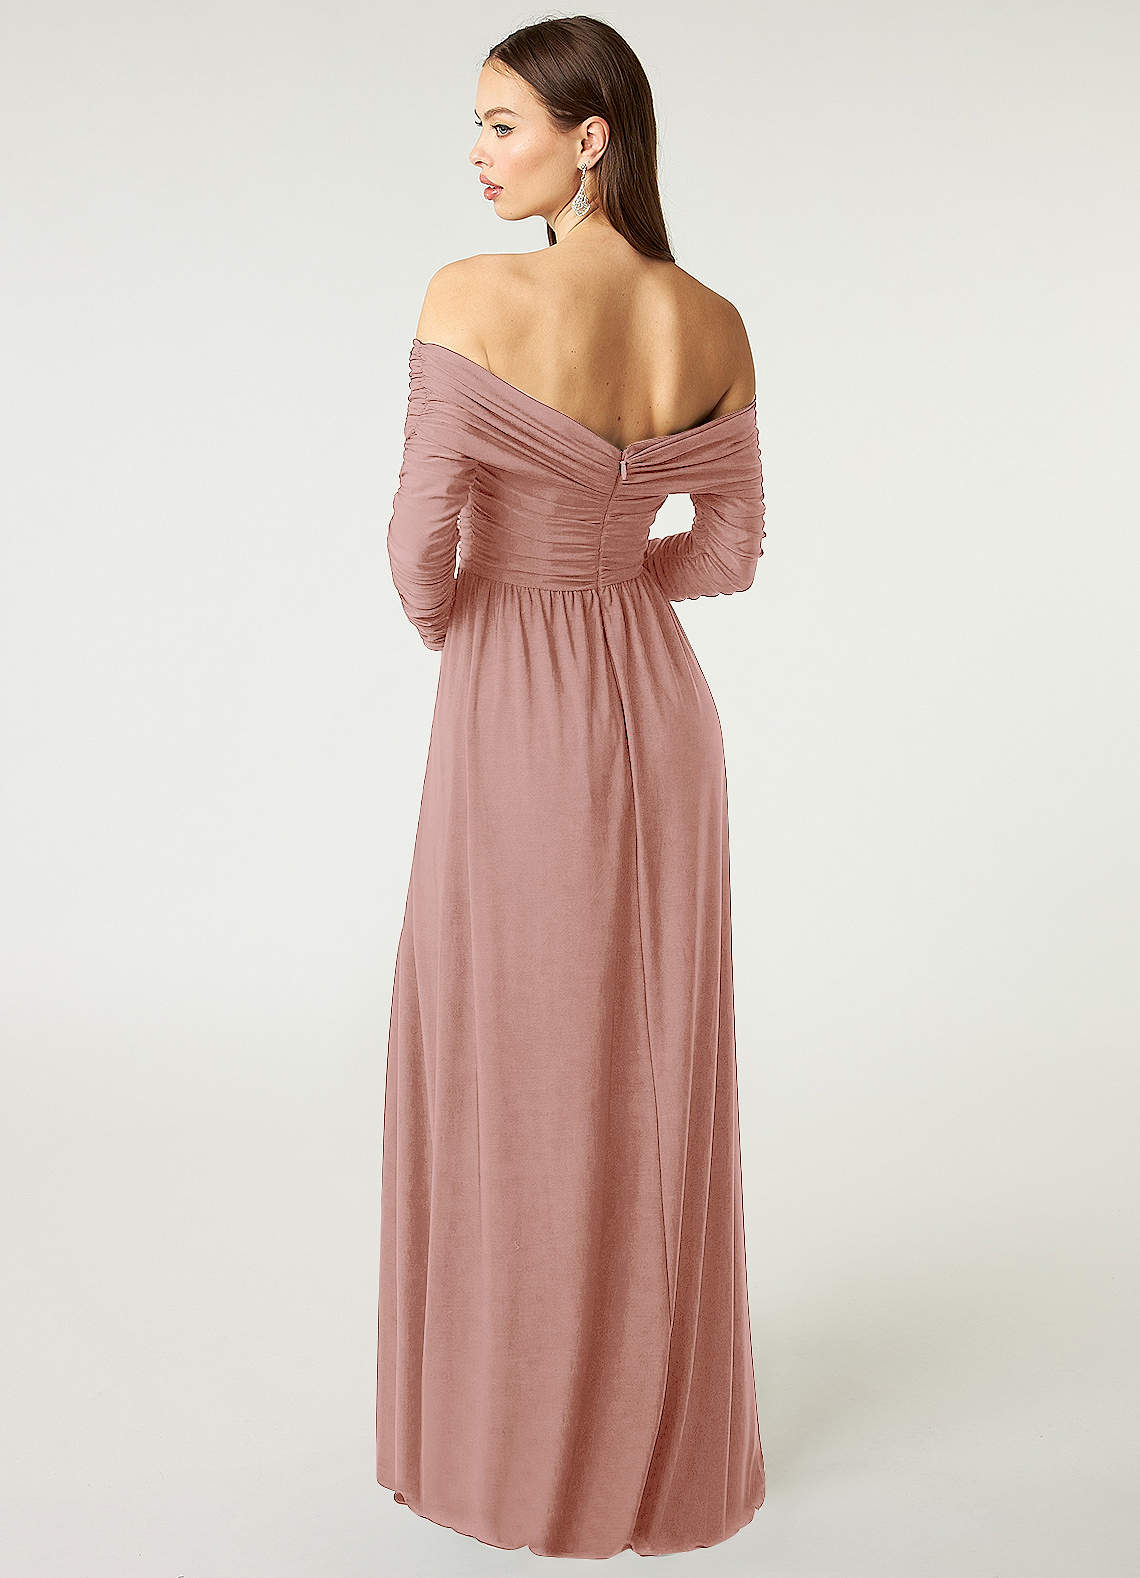 Azazie Logan Bridesmaid Dresses Sheath Off the Shoulder Luxe Knit Floor-Length Dress image1